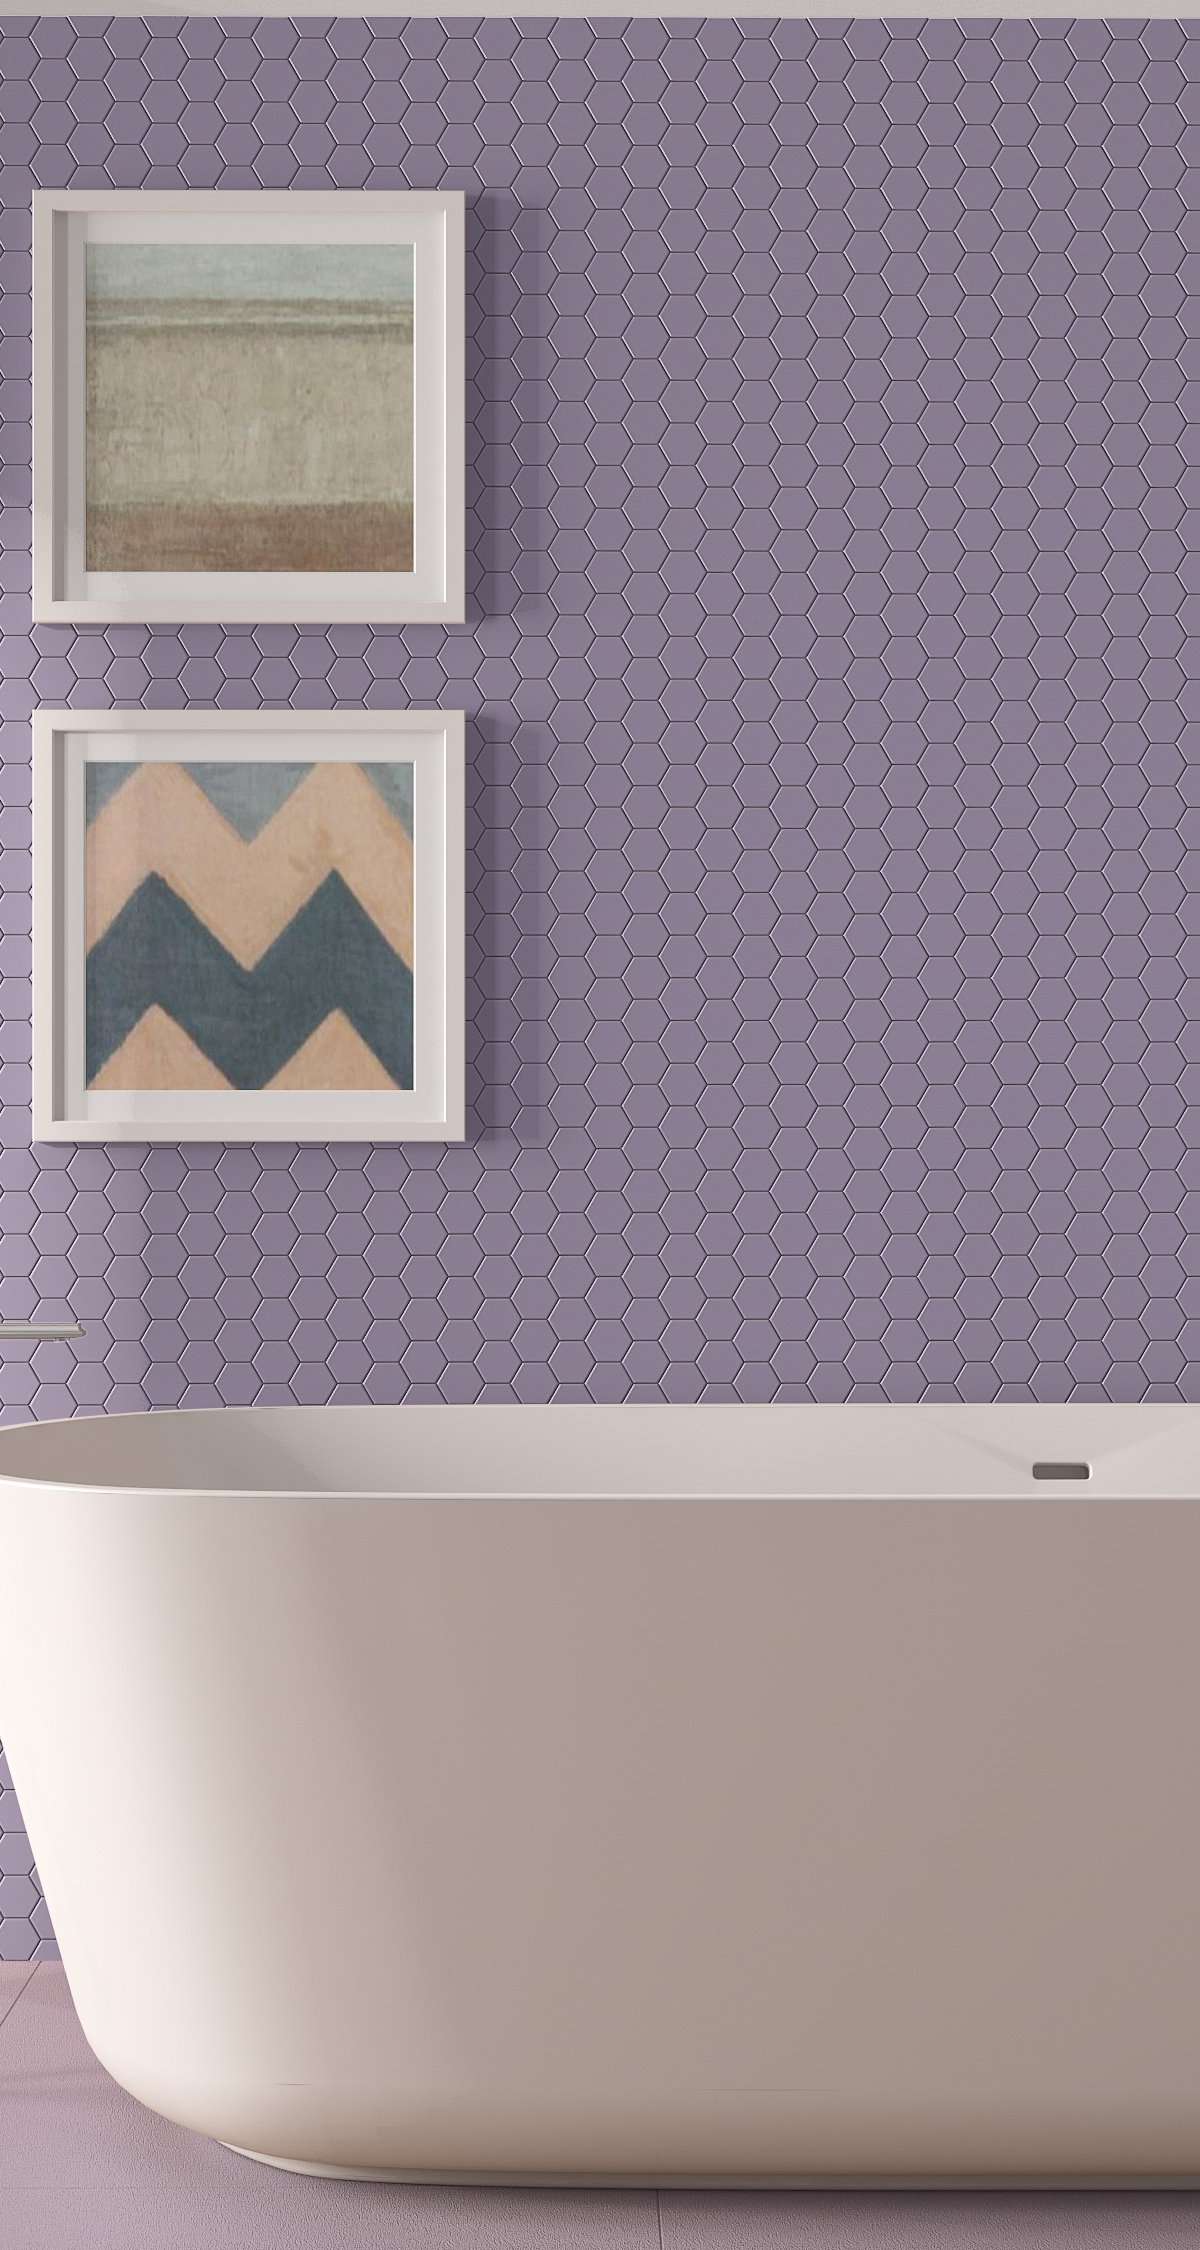 Purple bathroom Design with Pastel Paintings